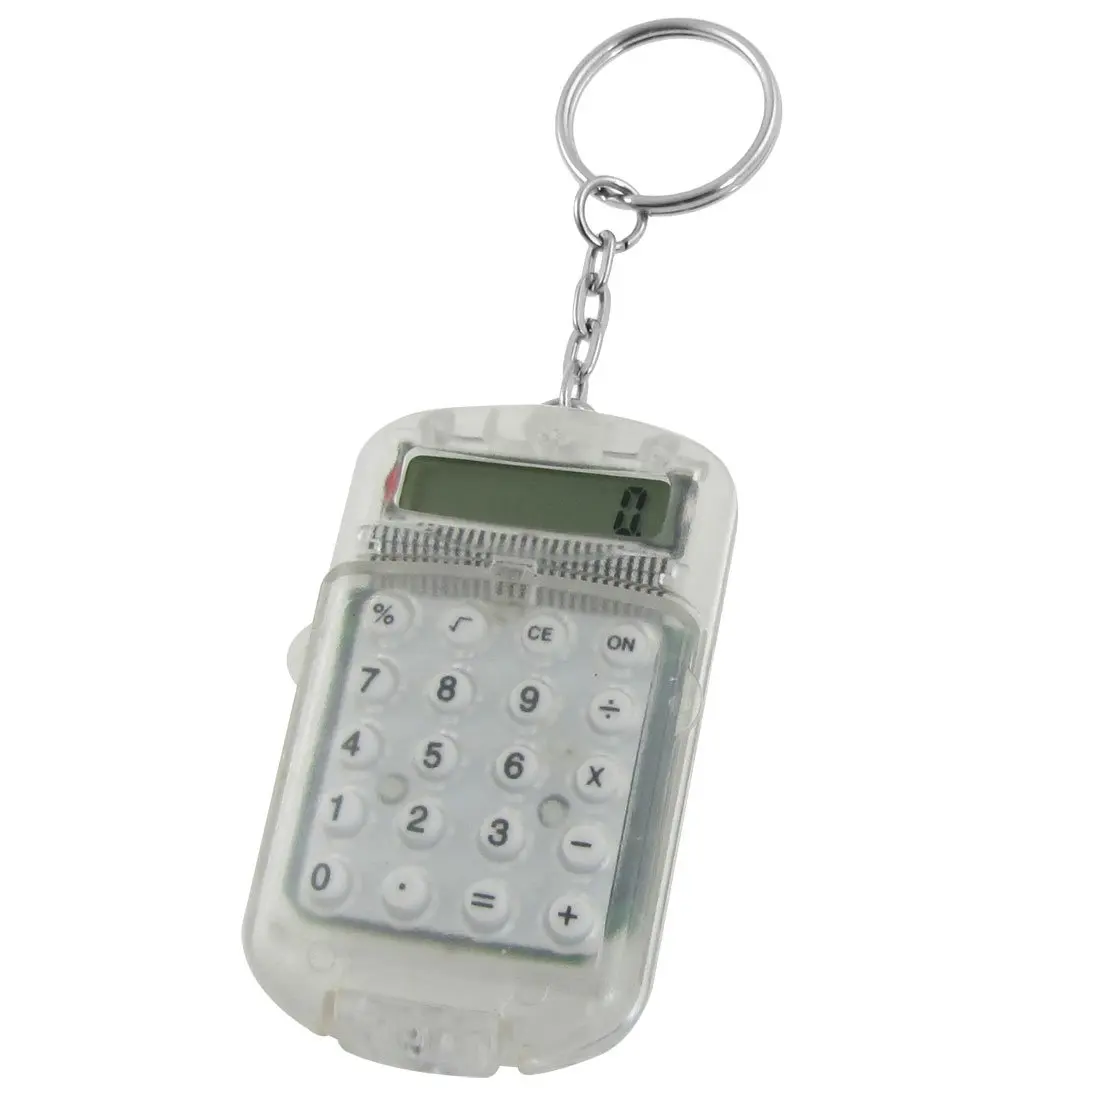 BLEL Горячий прозрачный пластиковый корпус 8 цифр электронный мини калькулятор w брелок